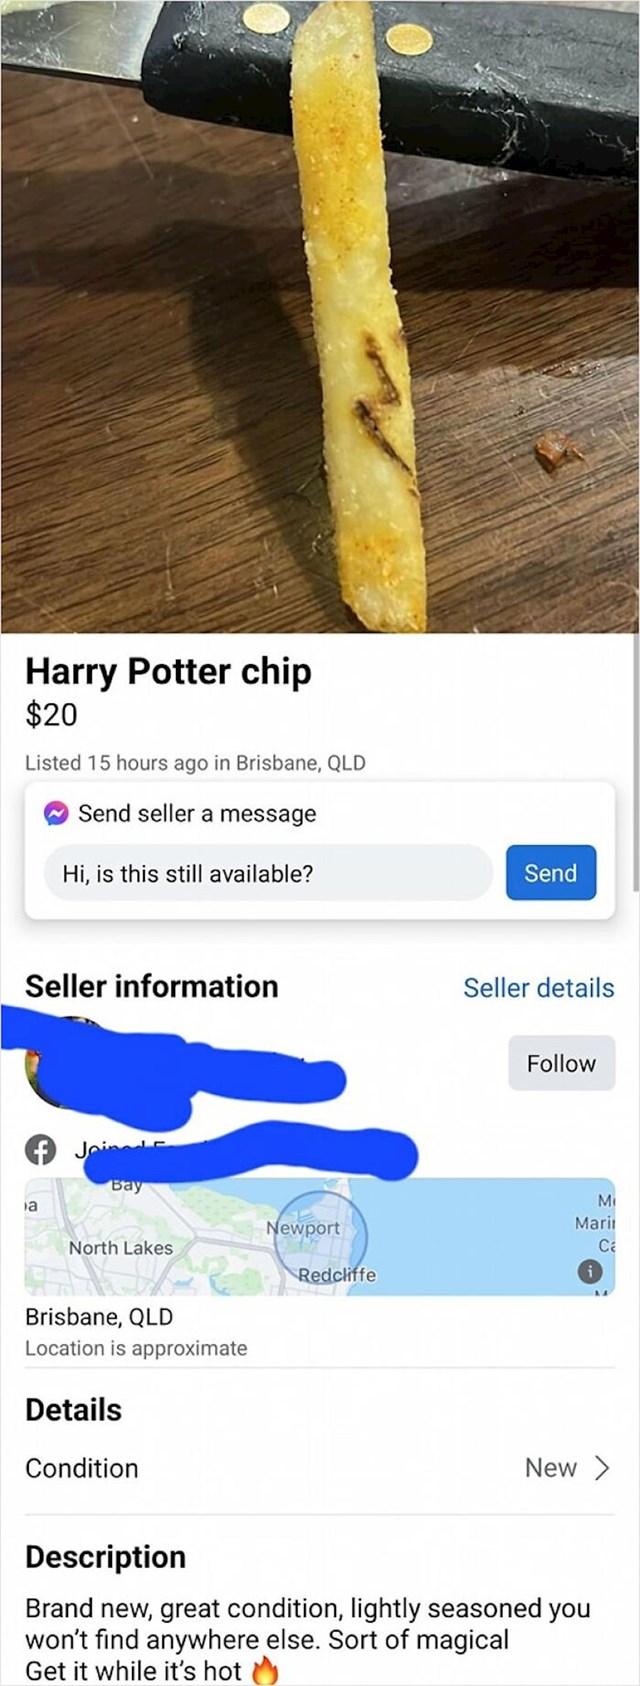 Harry Potter i darovi friteze